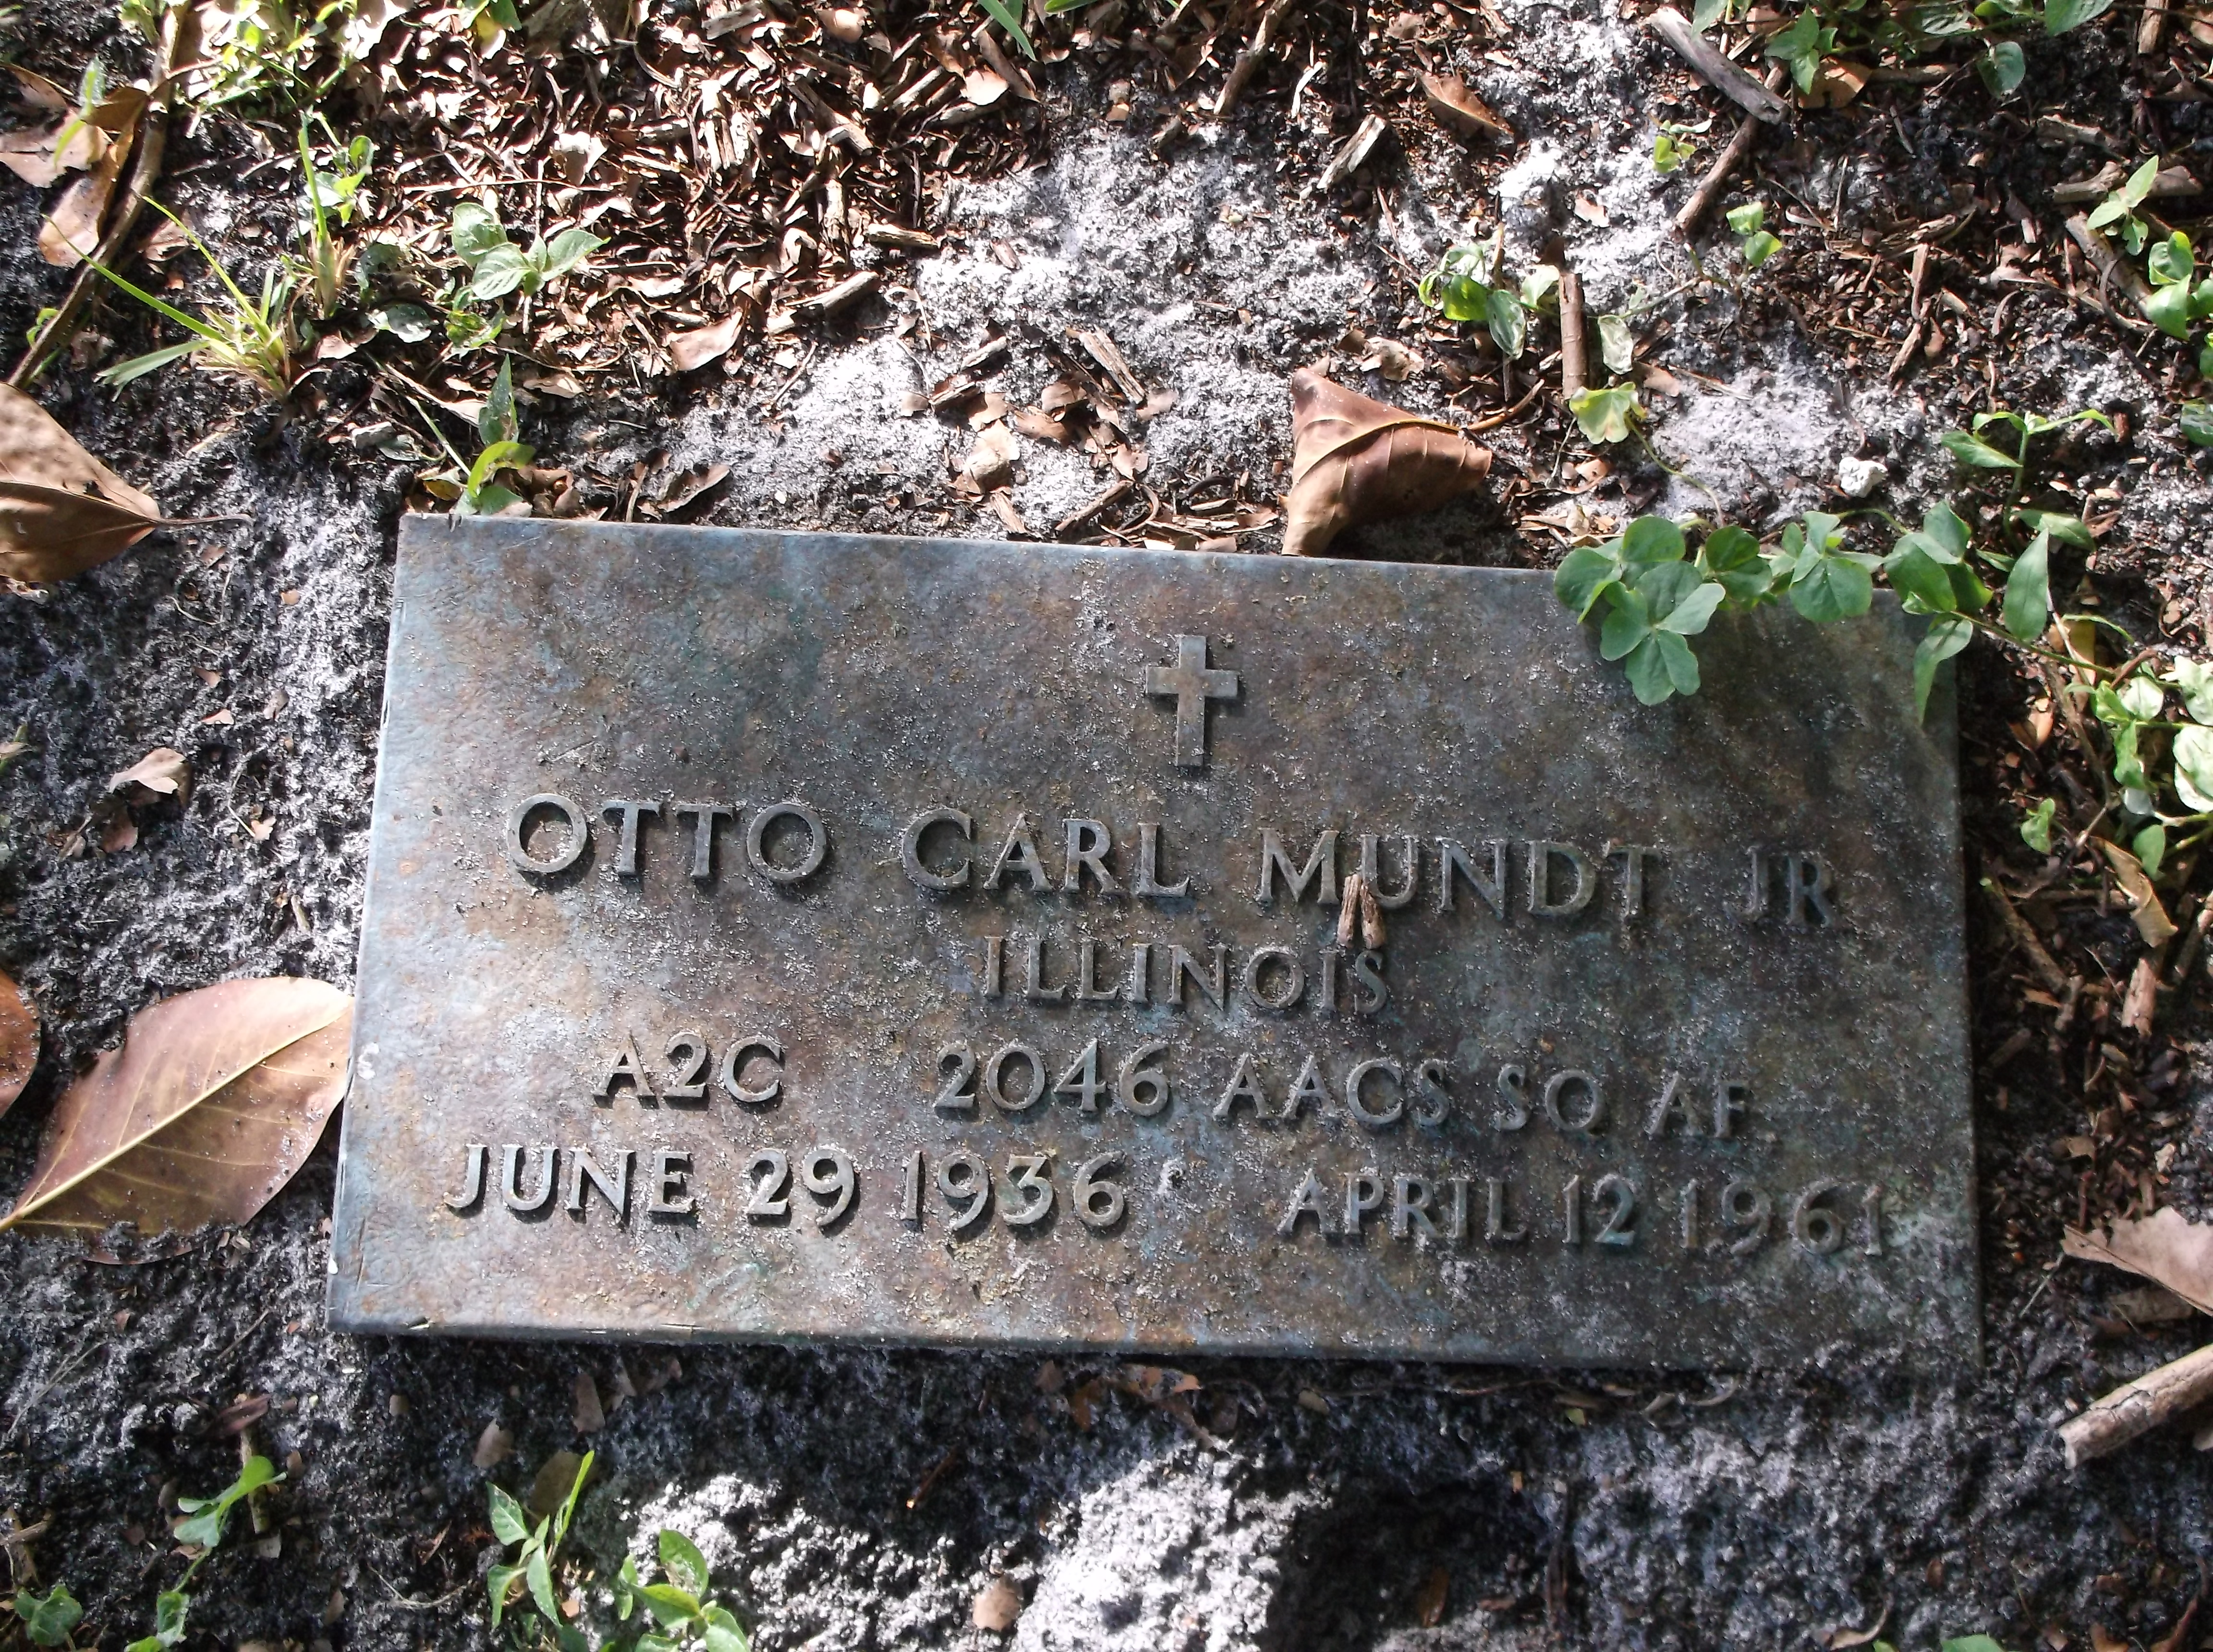 Otto Carl Mundt, Jr